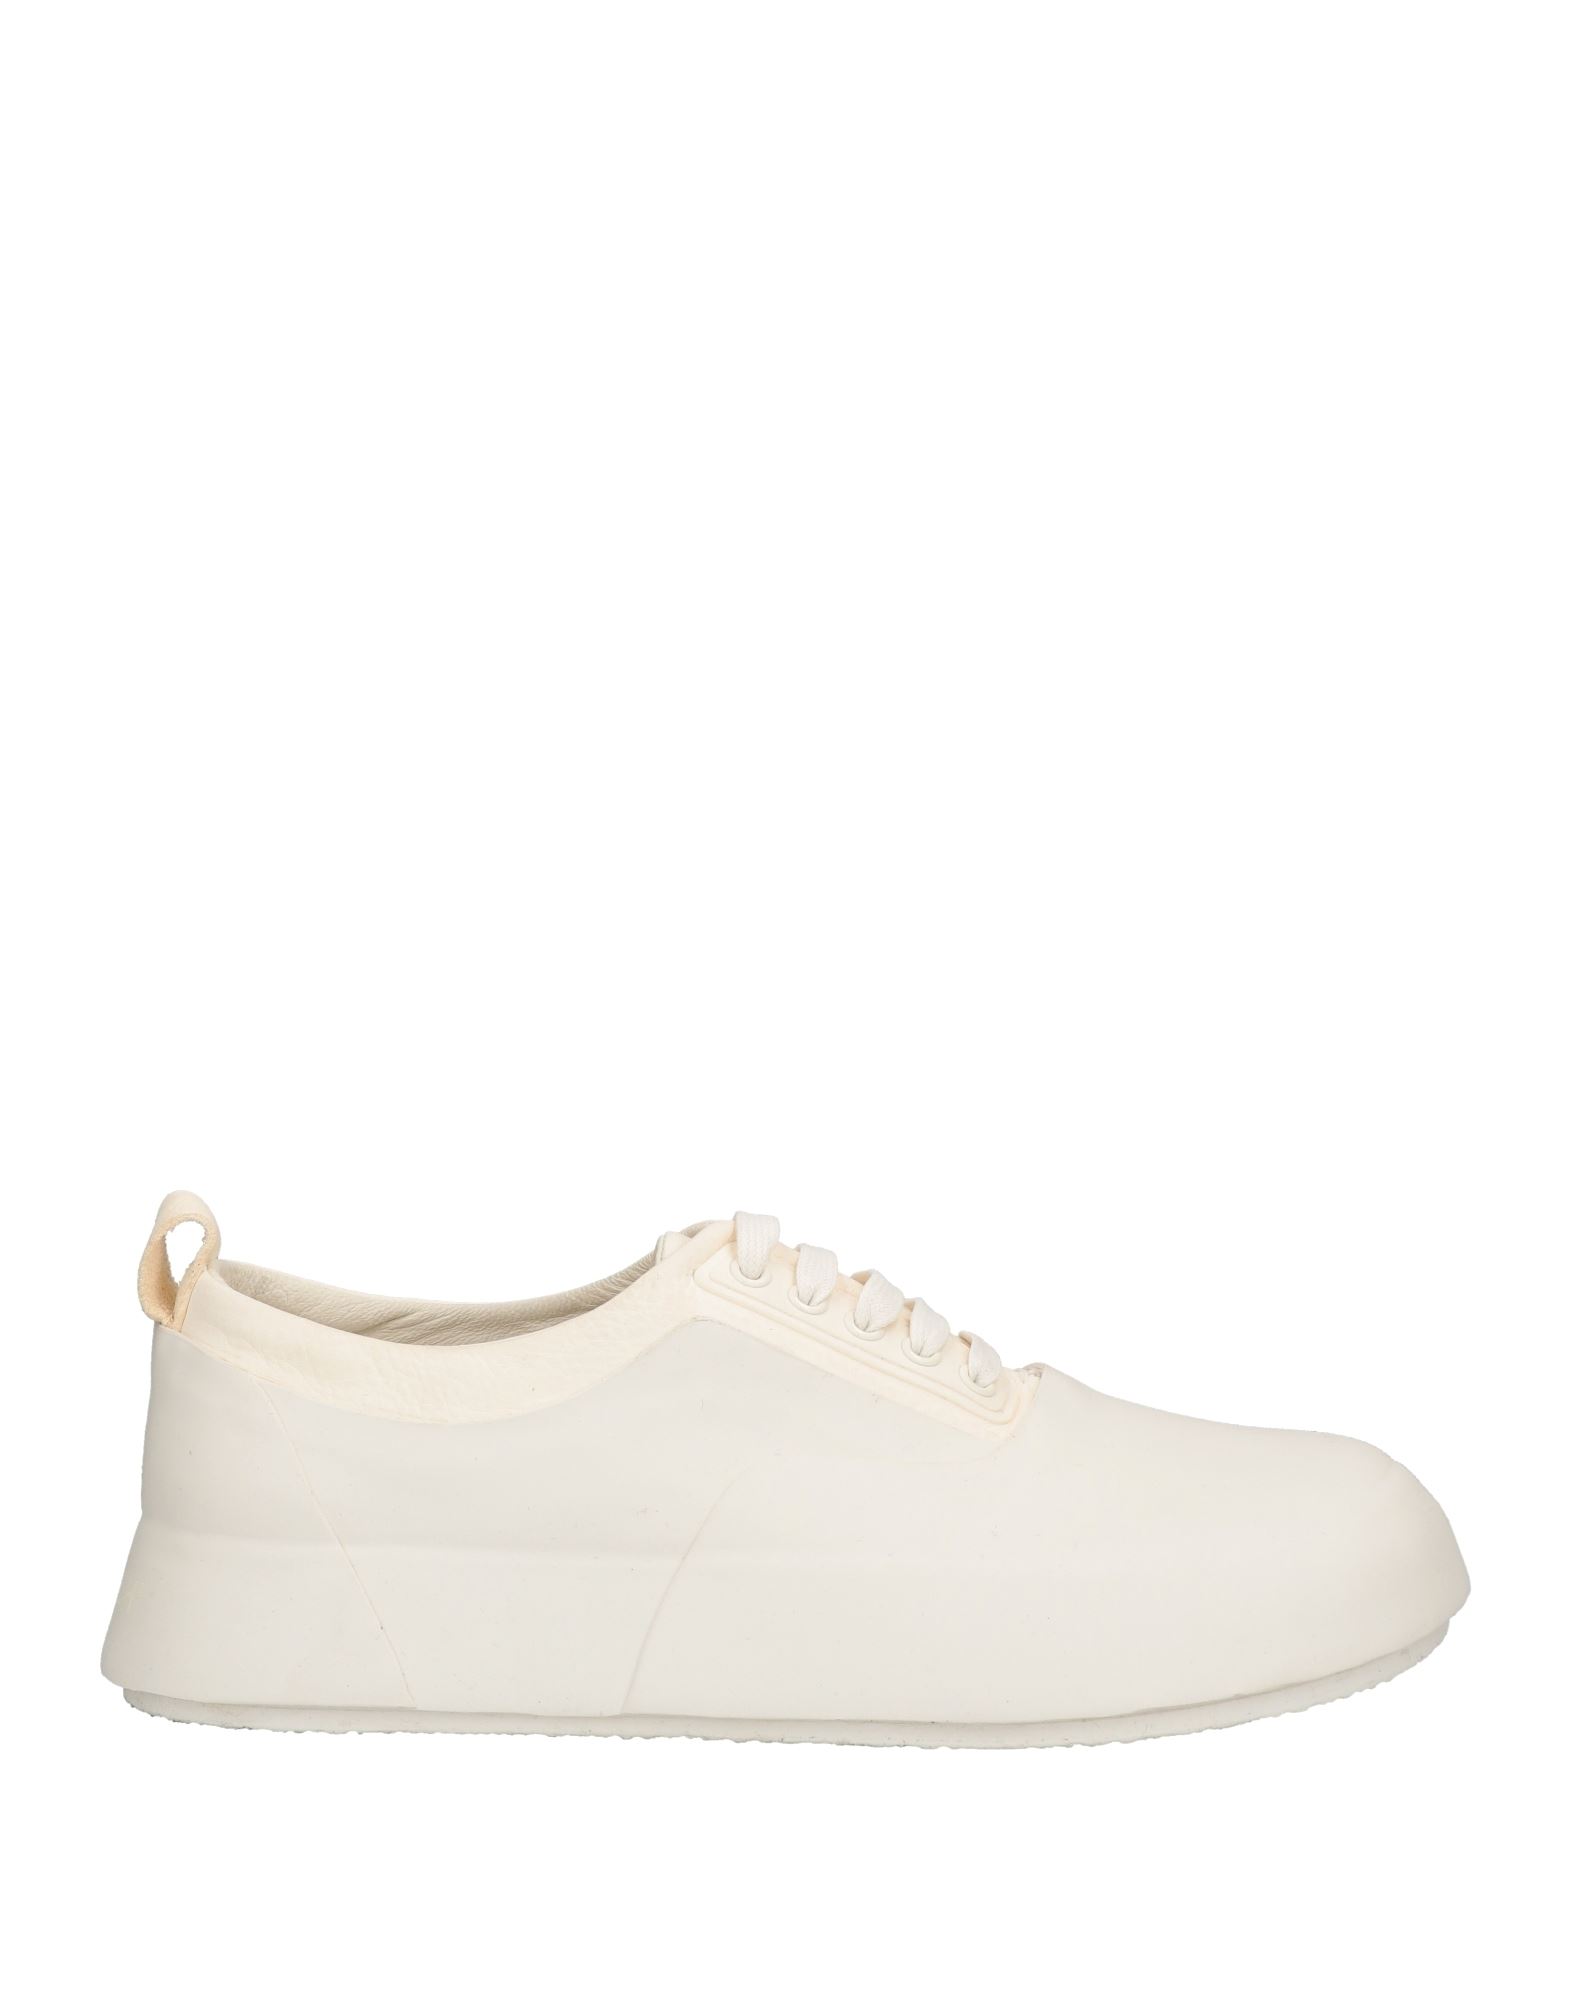 Shop Ambush Man Sneakers White Size 7 Rubber, Soft Leather